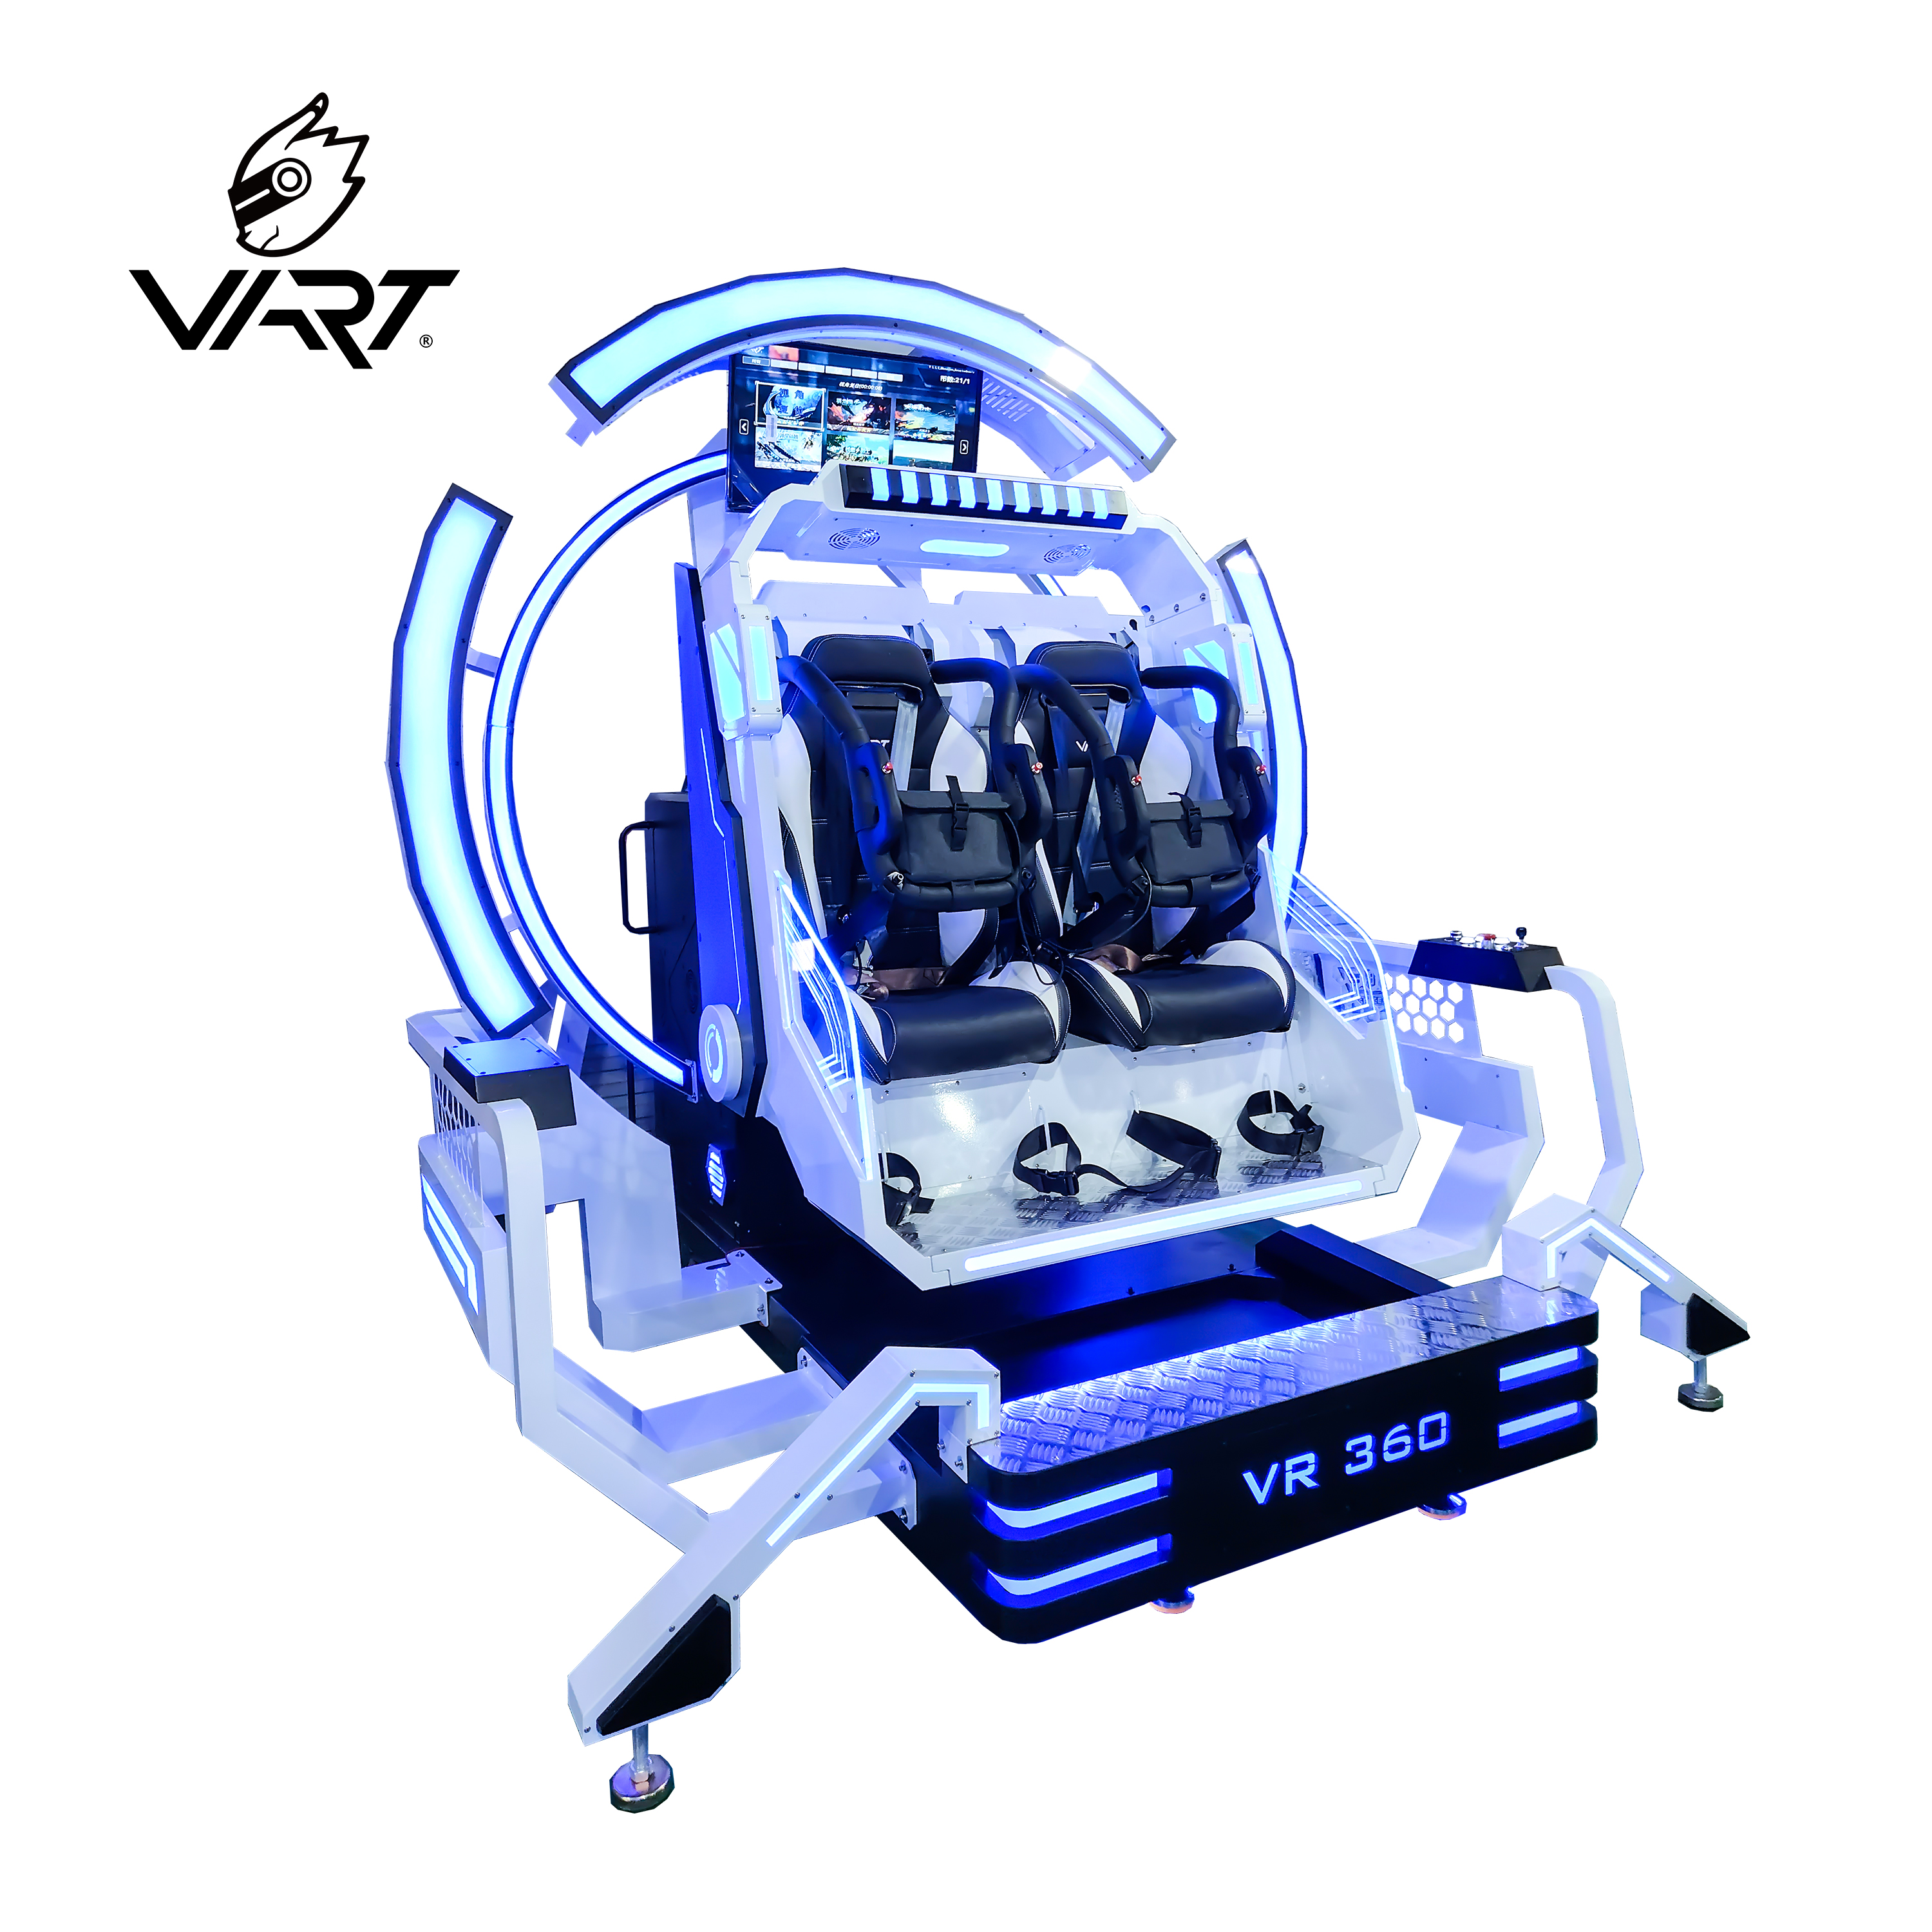 9d Vr 360 Degree Headtracking Roller Coaster Simulator Plus Virtual Reality Vibration 9d Cinema Featured Image සඳහා අඩු මිල